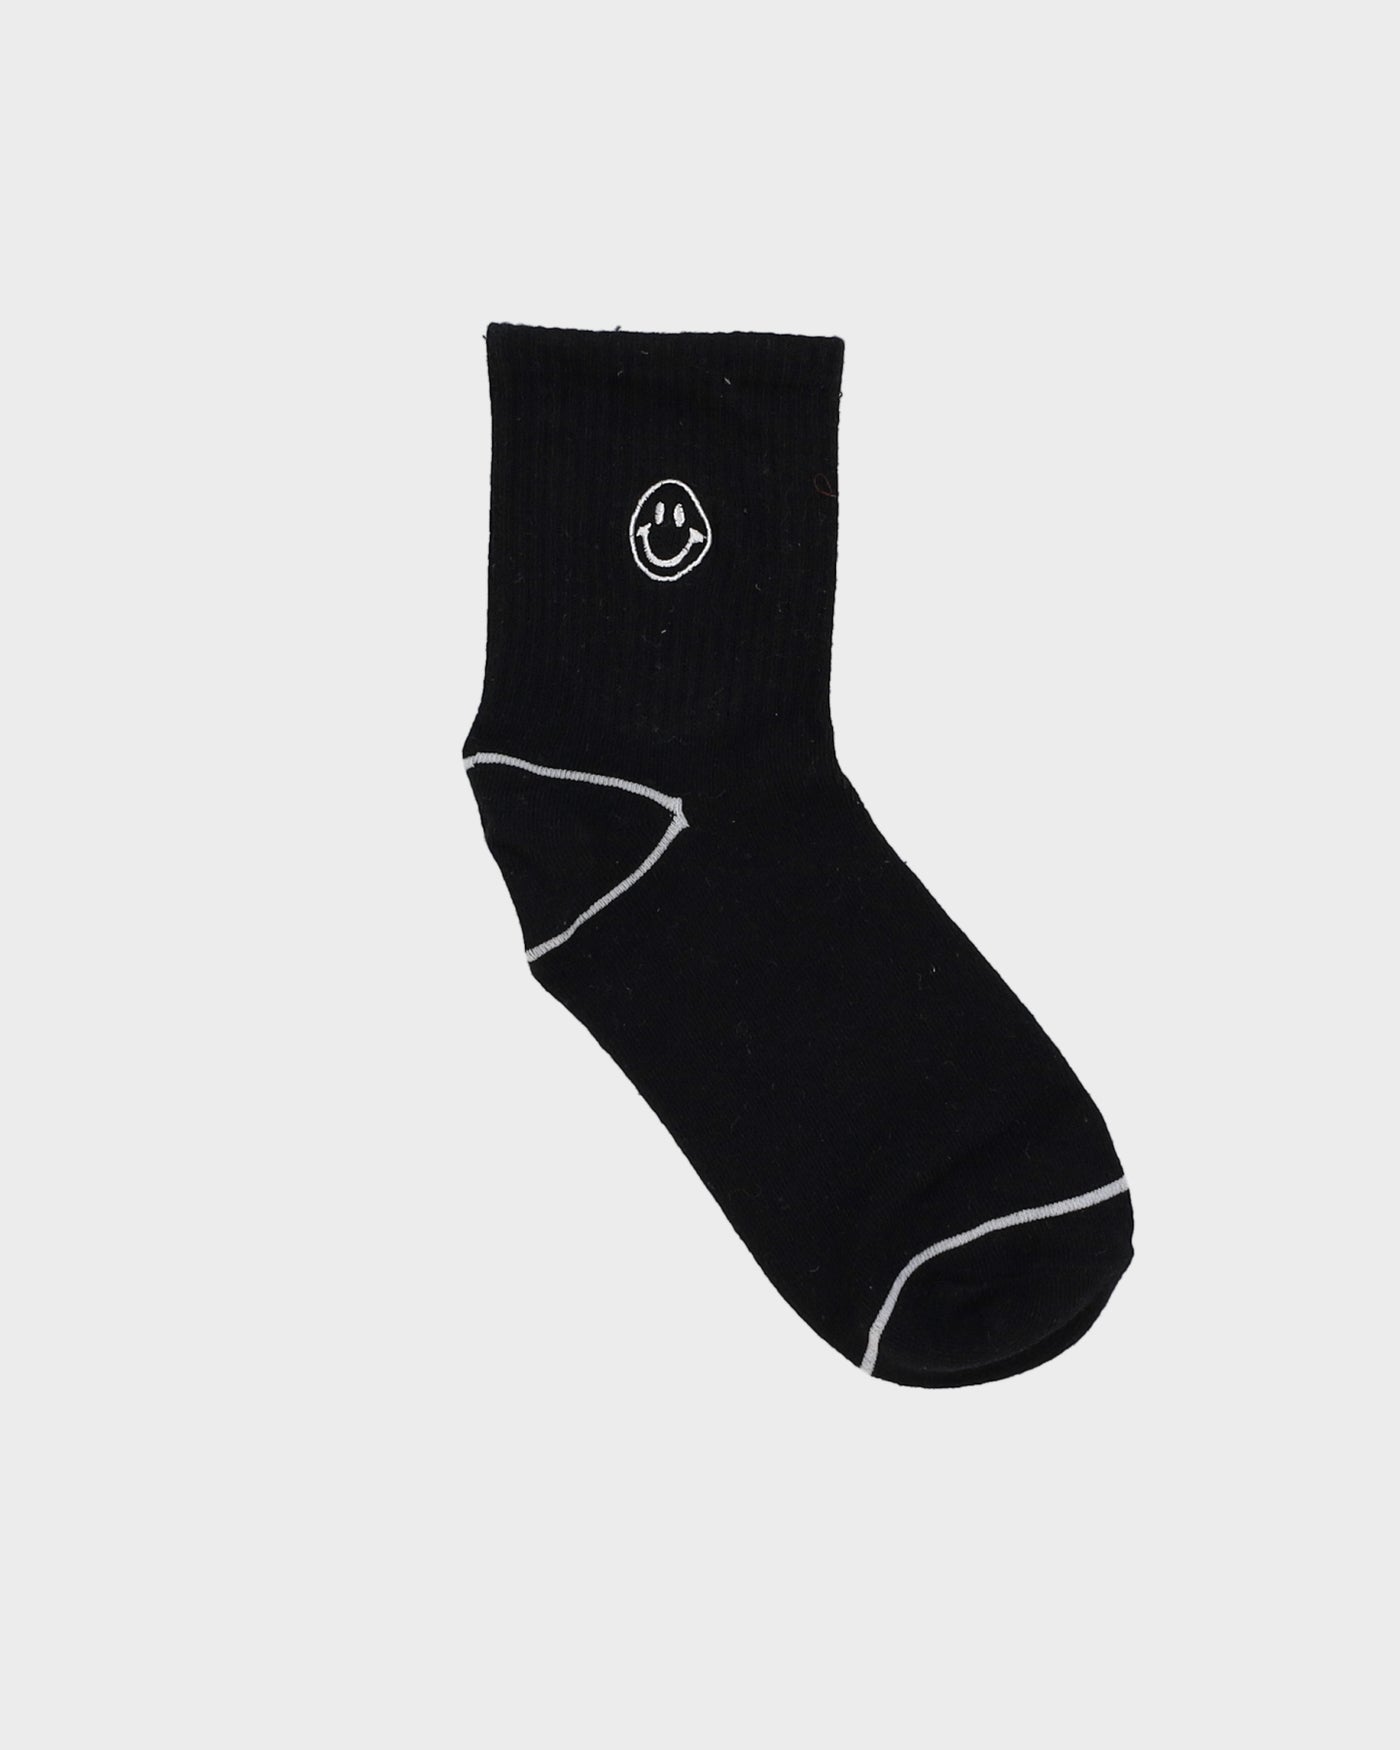 Smiley Embroidered Black Socks